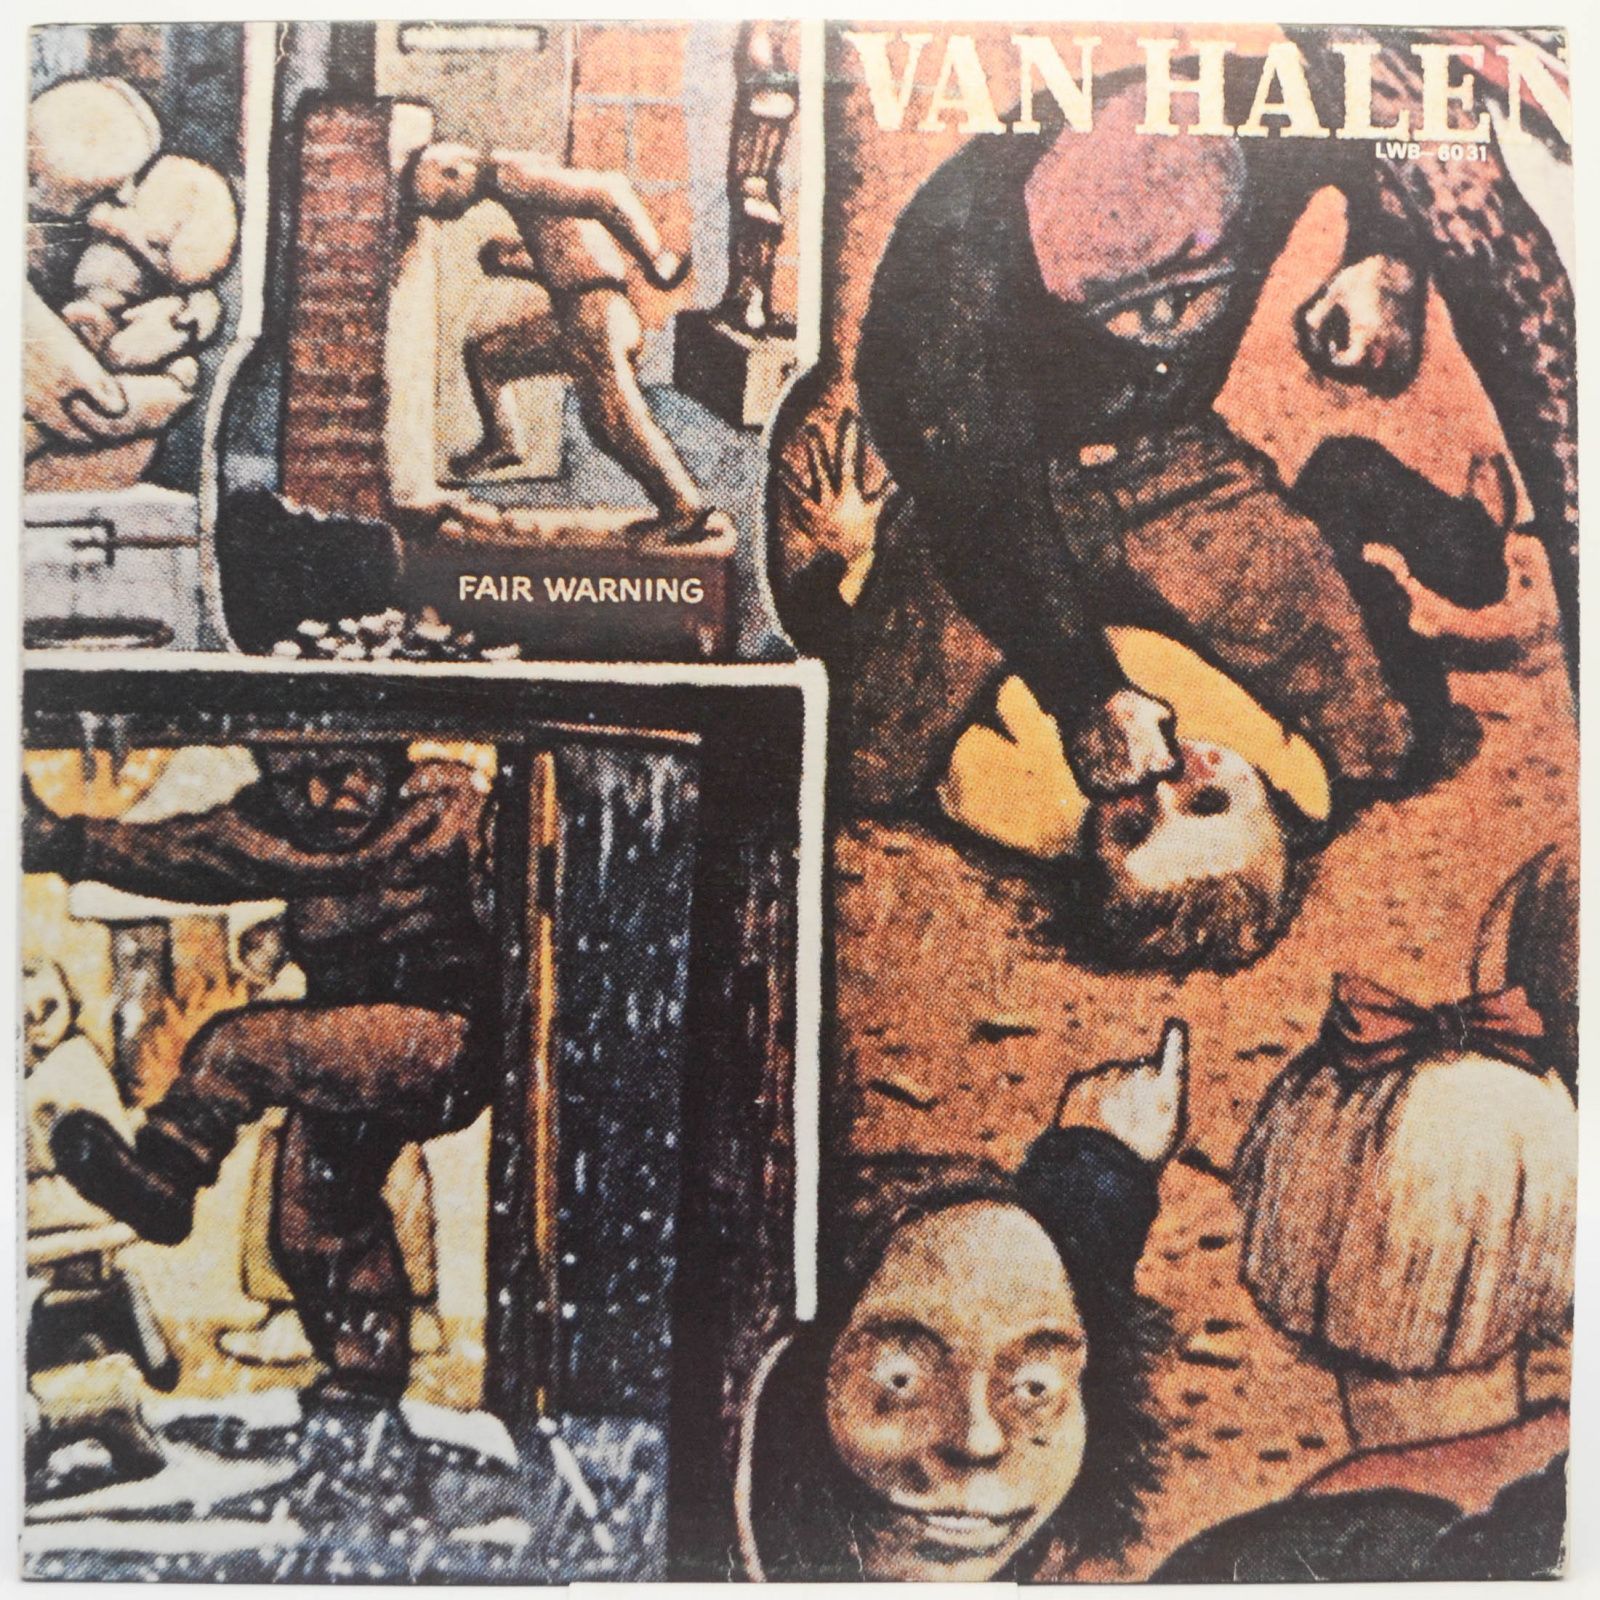 Van Halen — Fair Warning, 1981